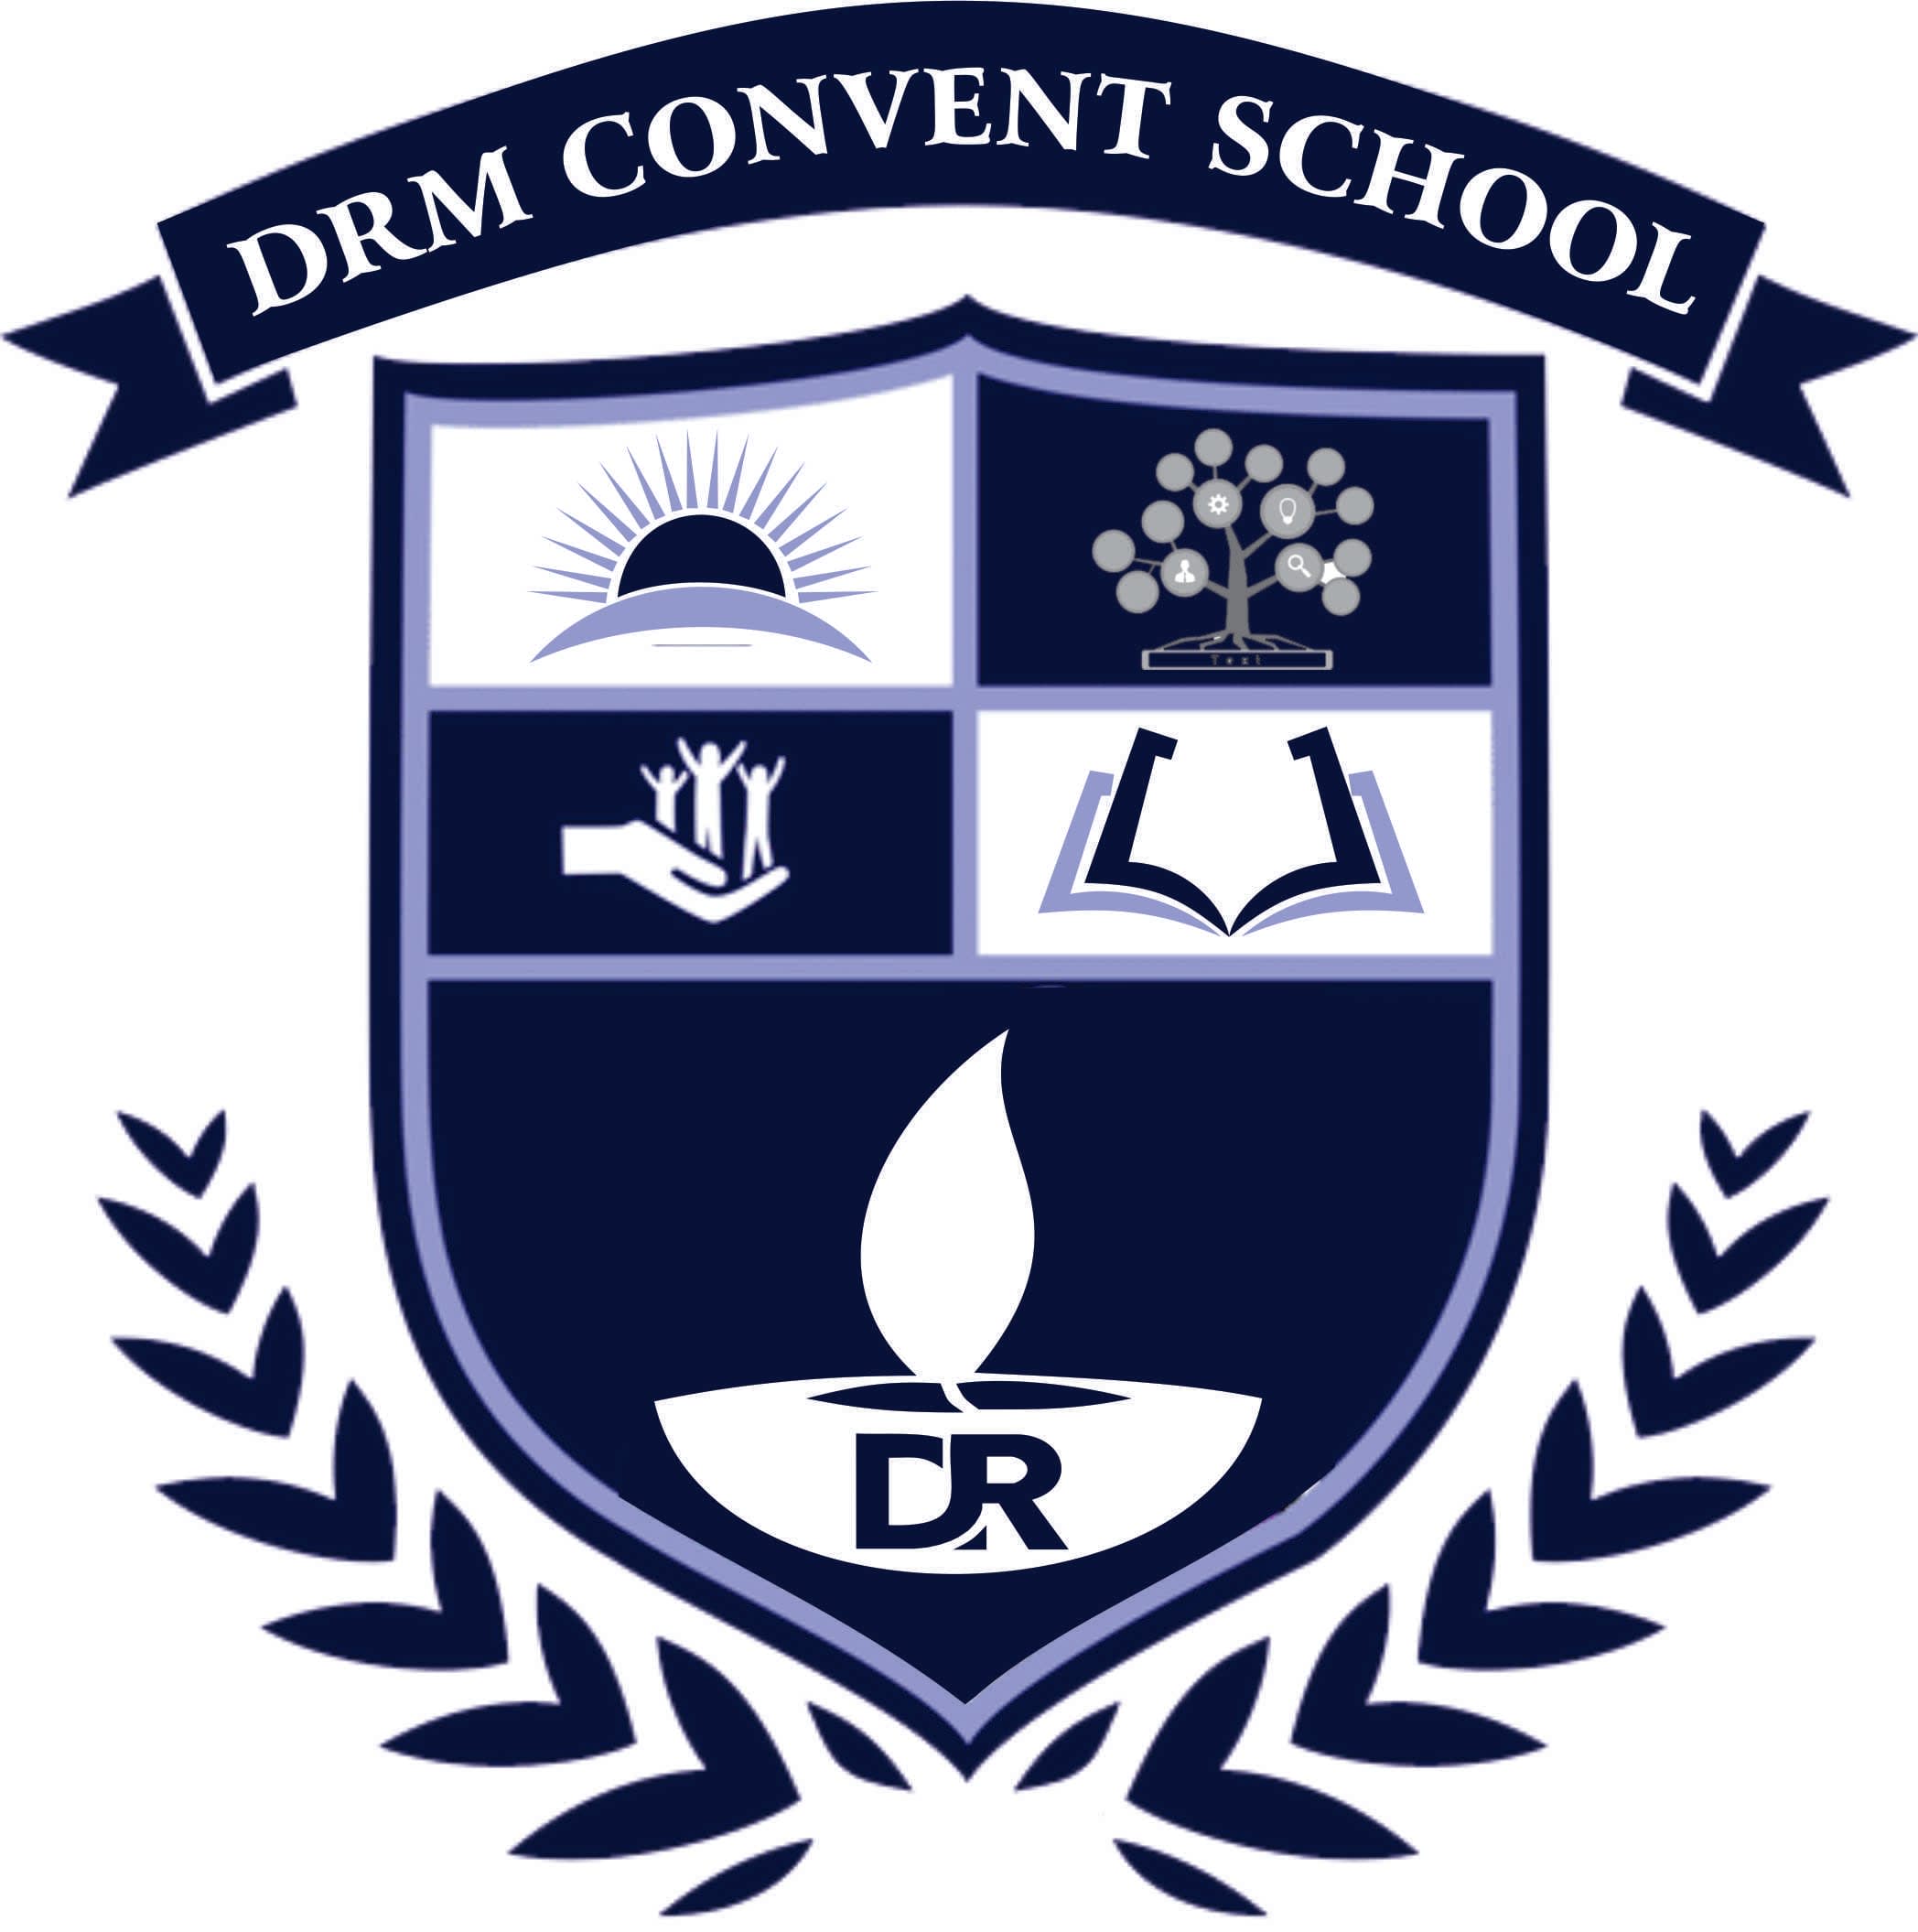 DRM Convent School